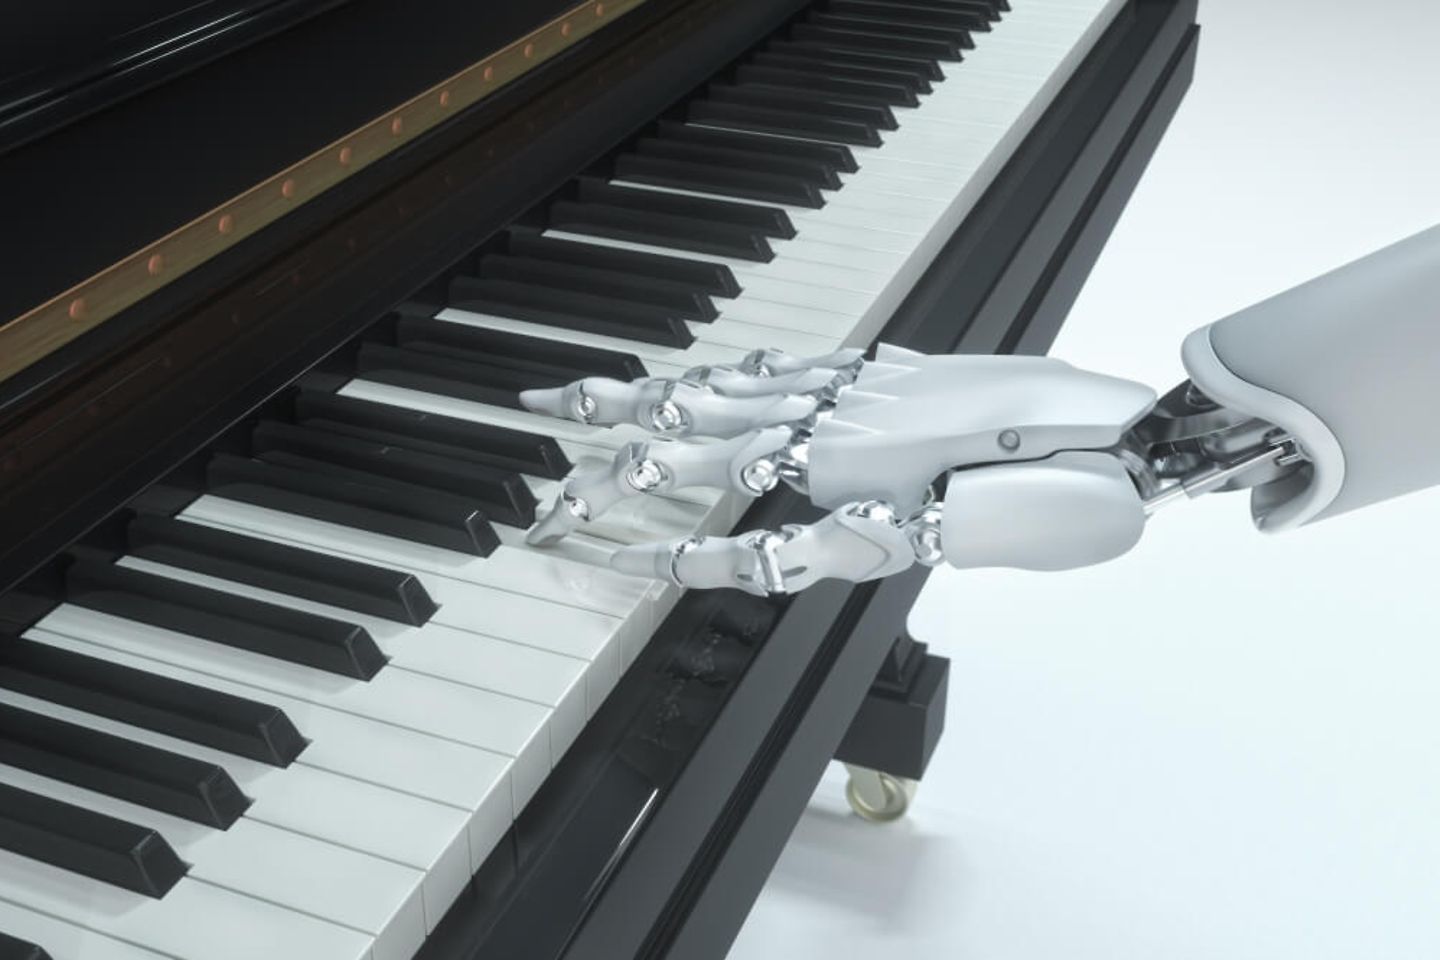 Robot hand on piano keys